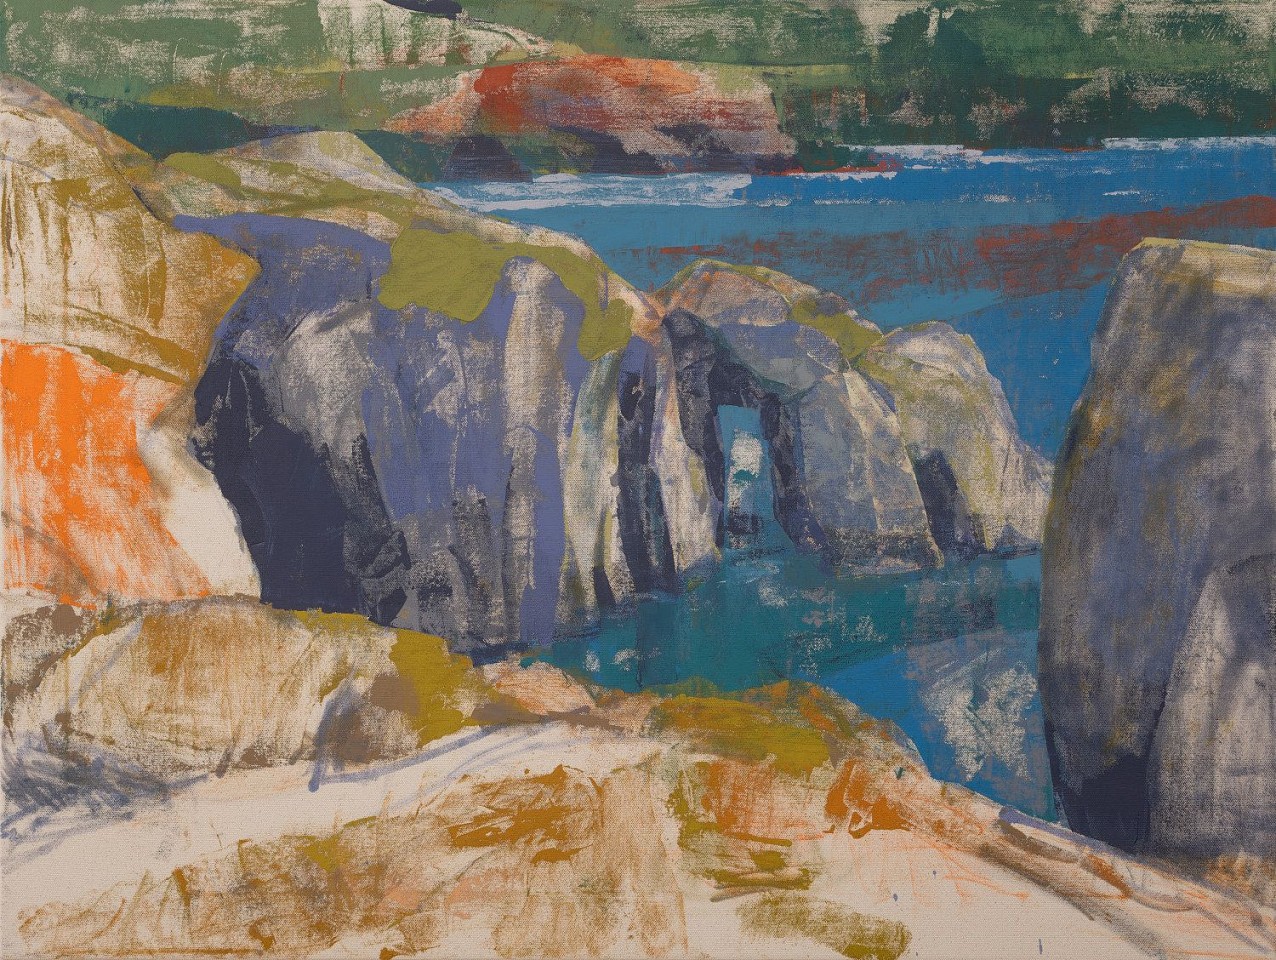 Eric Dever, Monterey | SOLD, 2022
Oil on canvas, 36 x 48 in. (91.4 x 121.9 cm)
DEV-00213